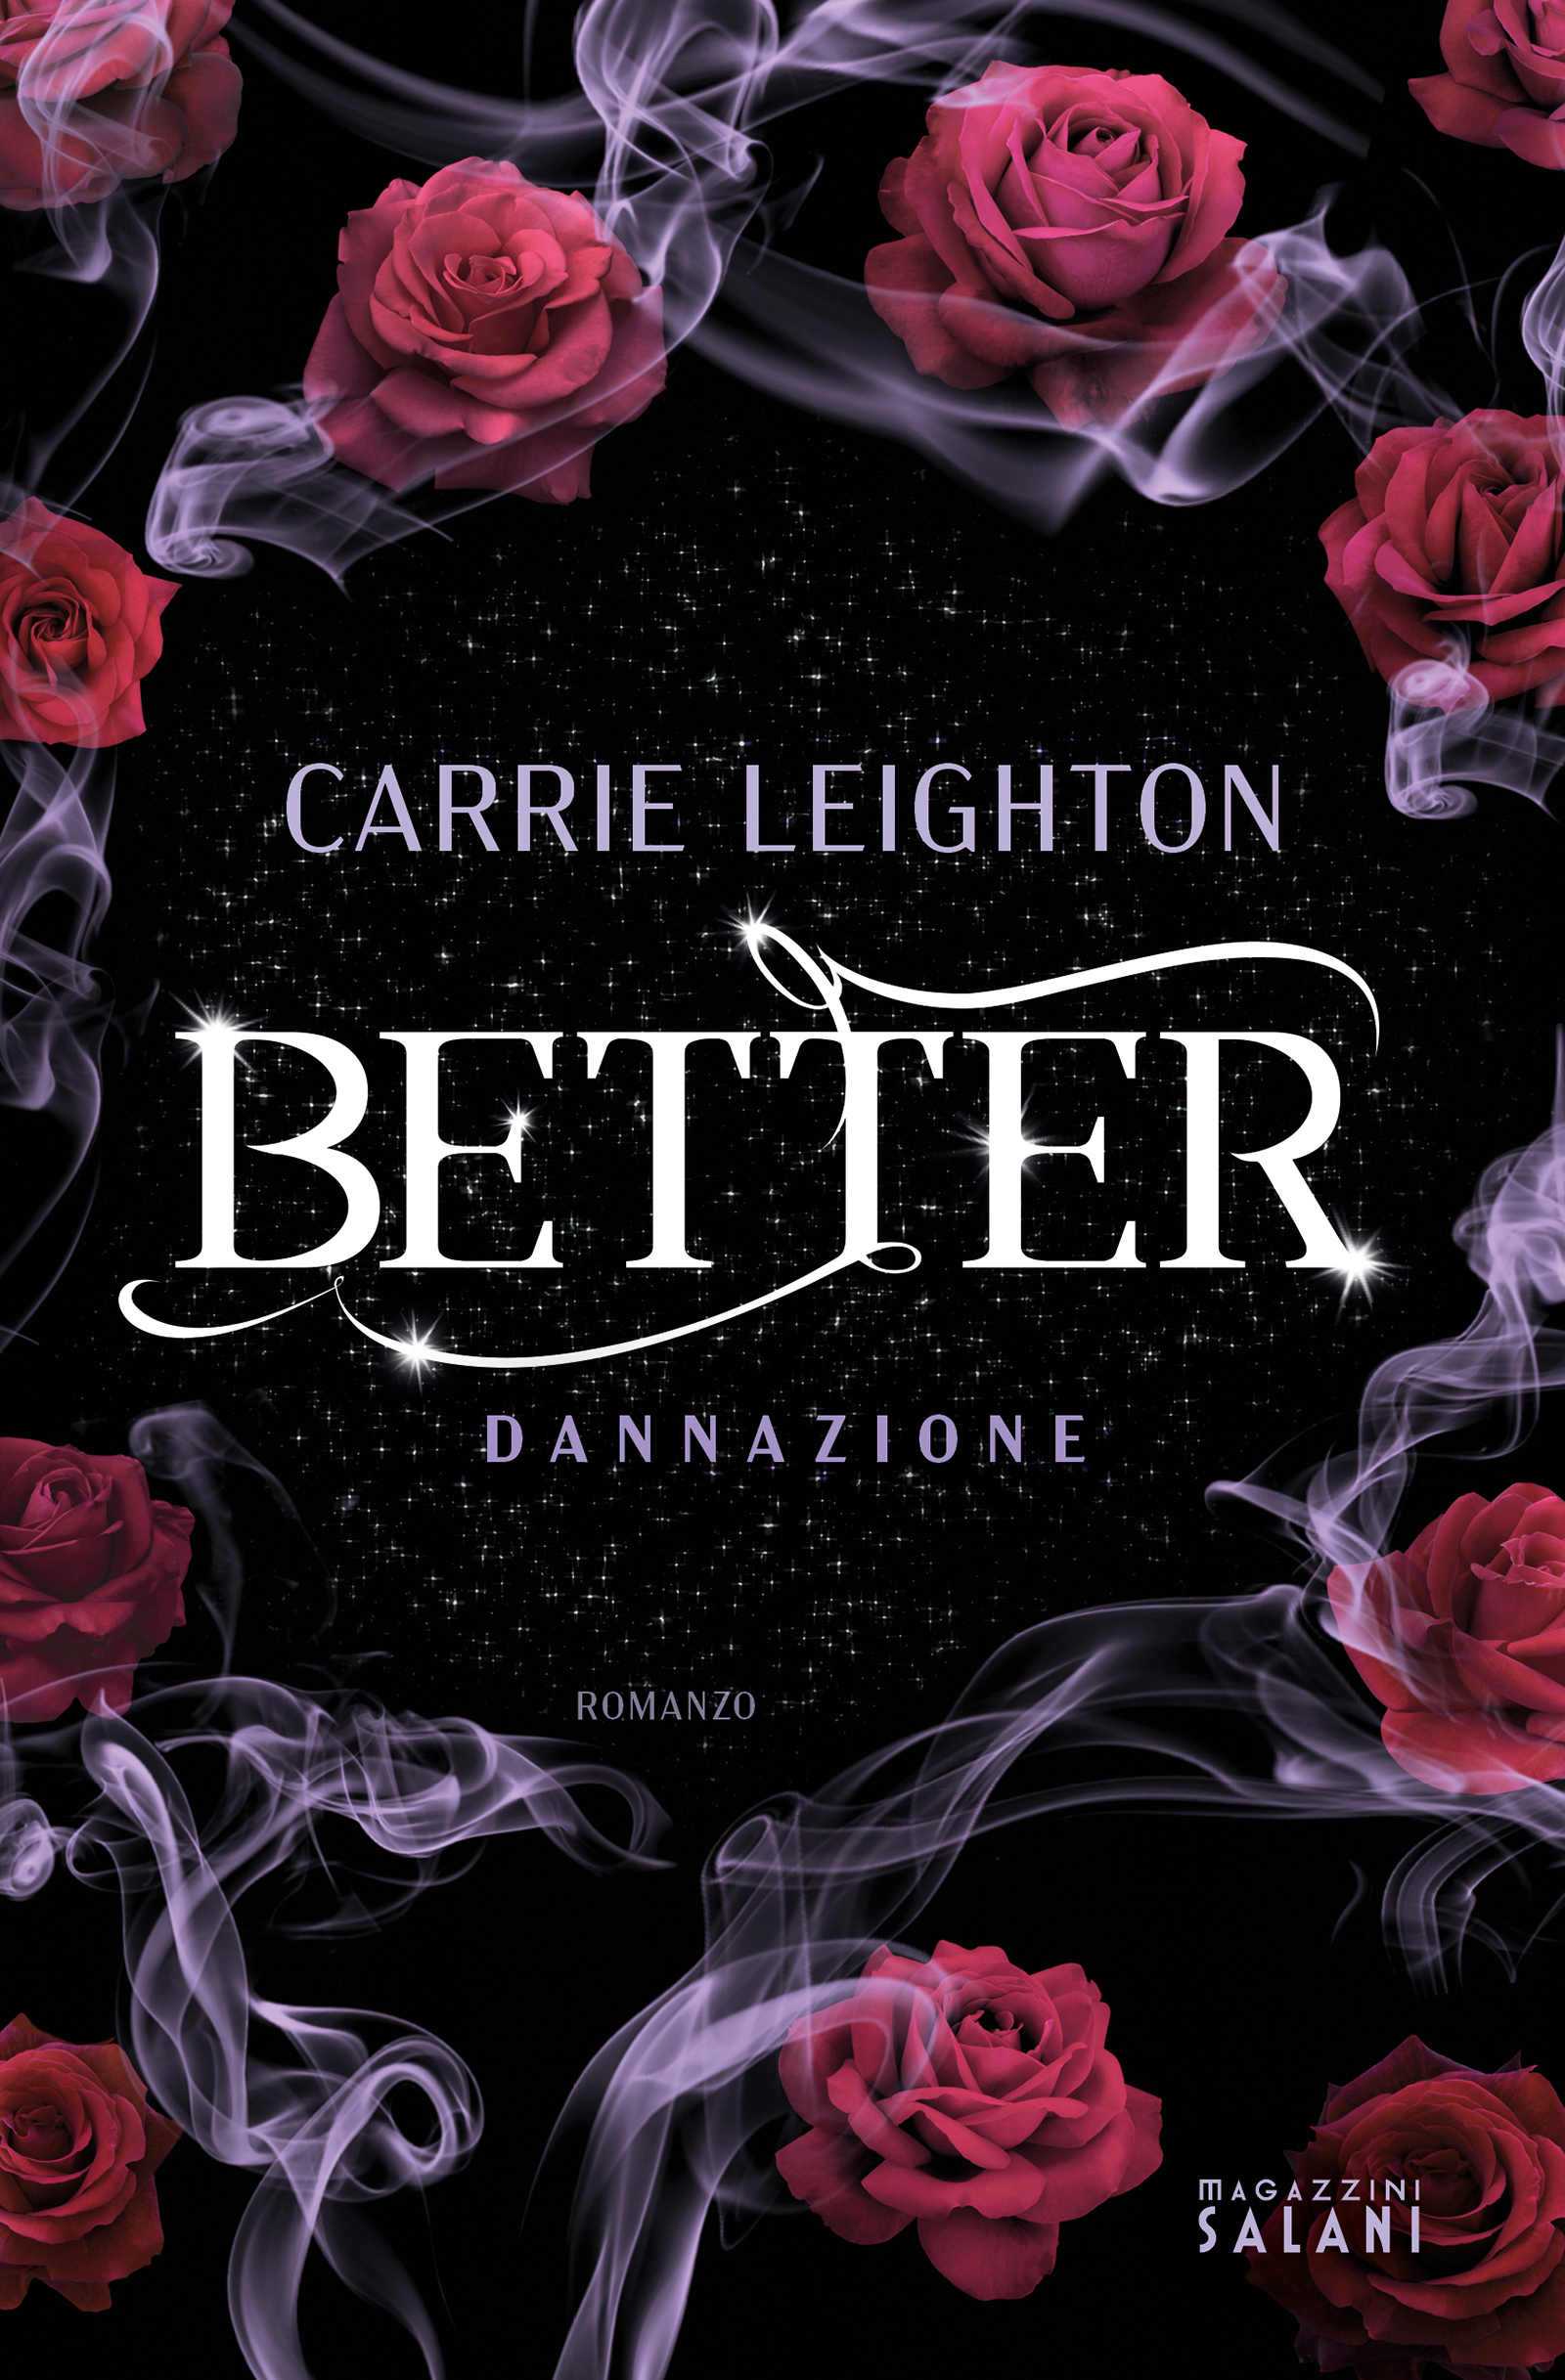 Better dannazione Carrie Leighton